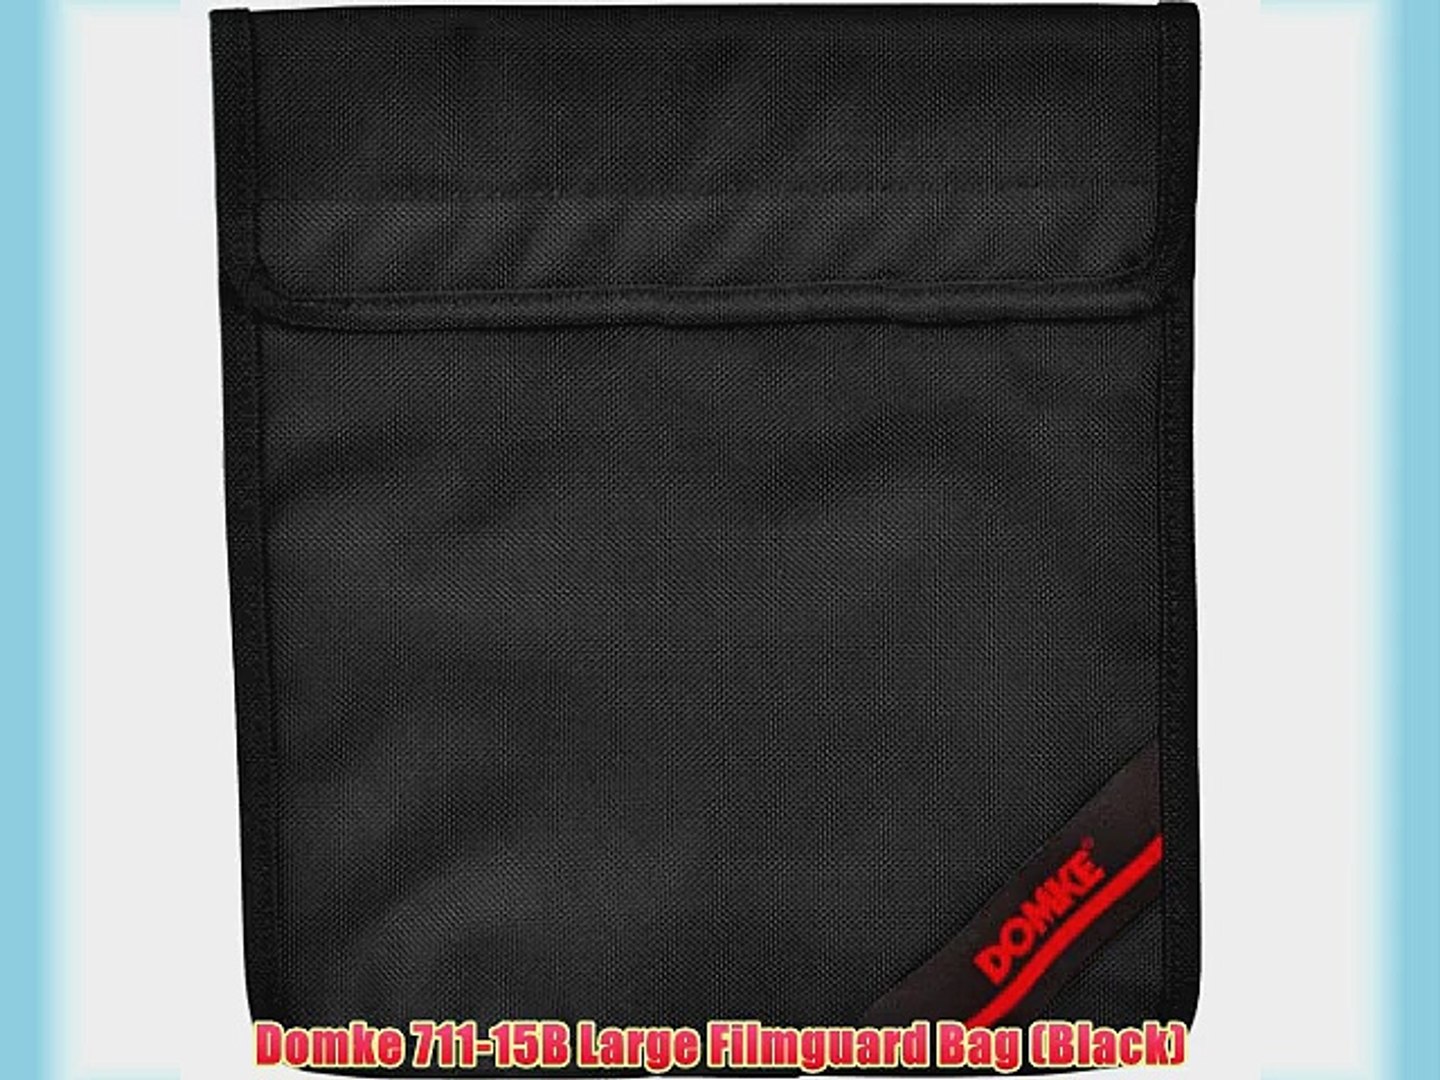 Domke 711-15B Large Filmguard Bag Black 